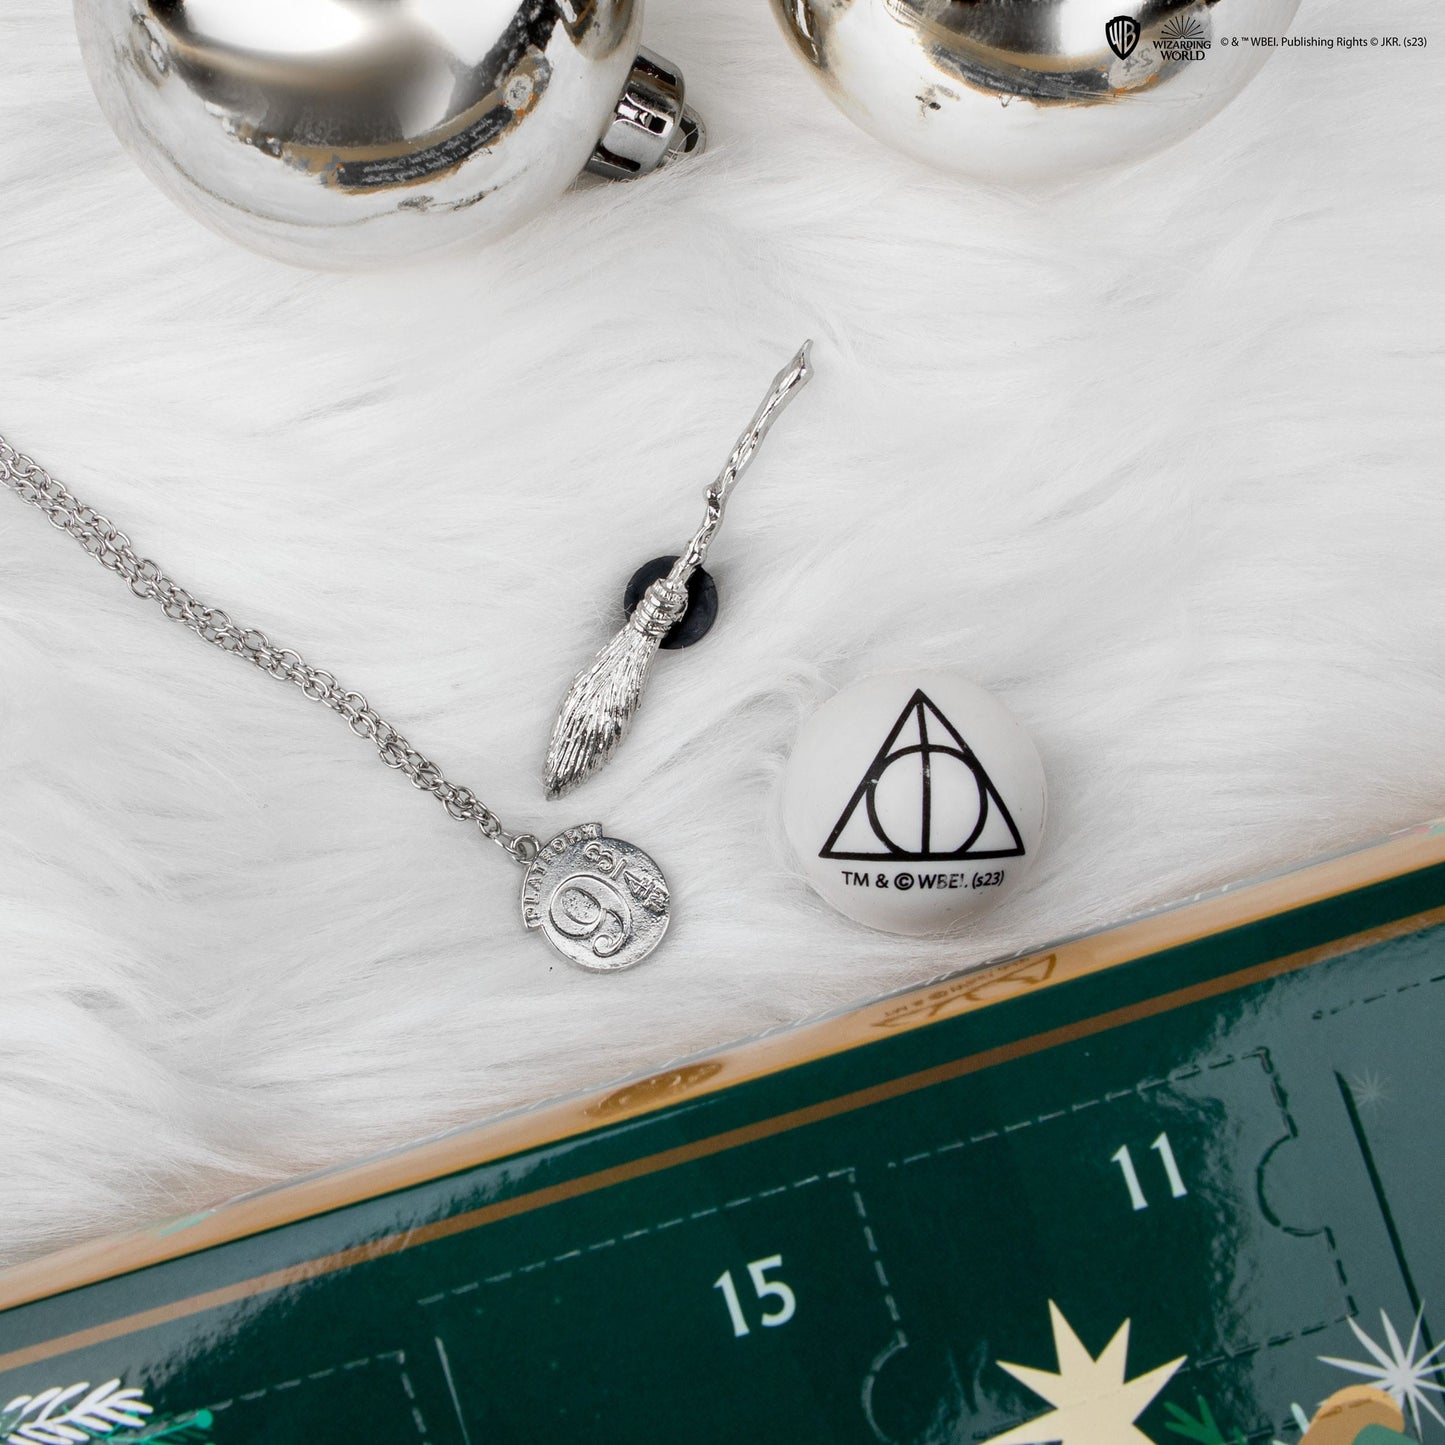 Harry Potter Advent Calendar - Wizarding World Classic 